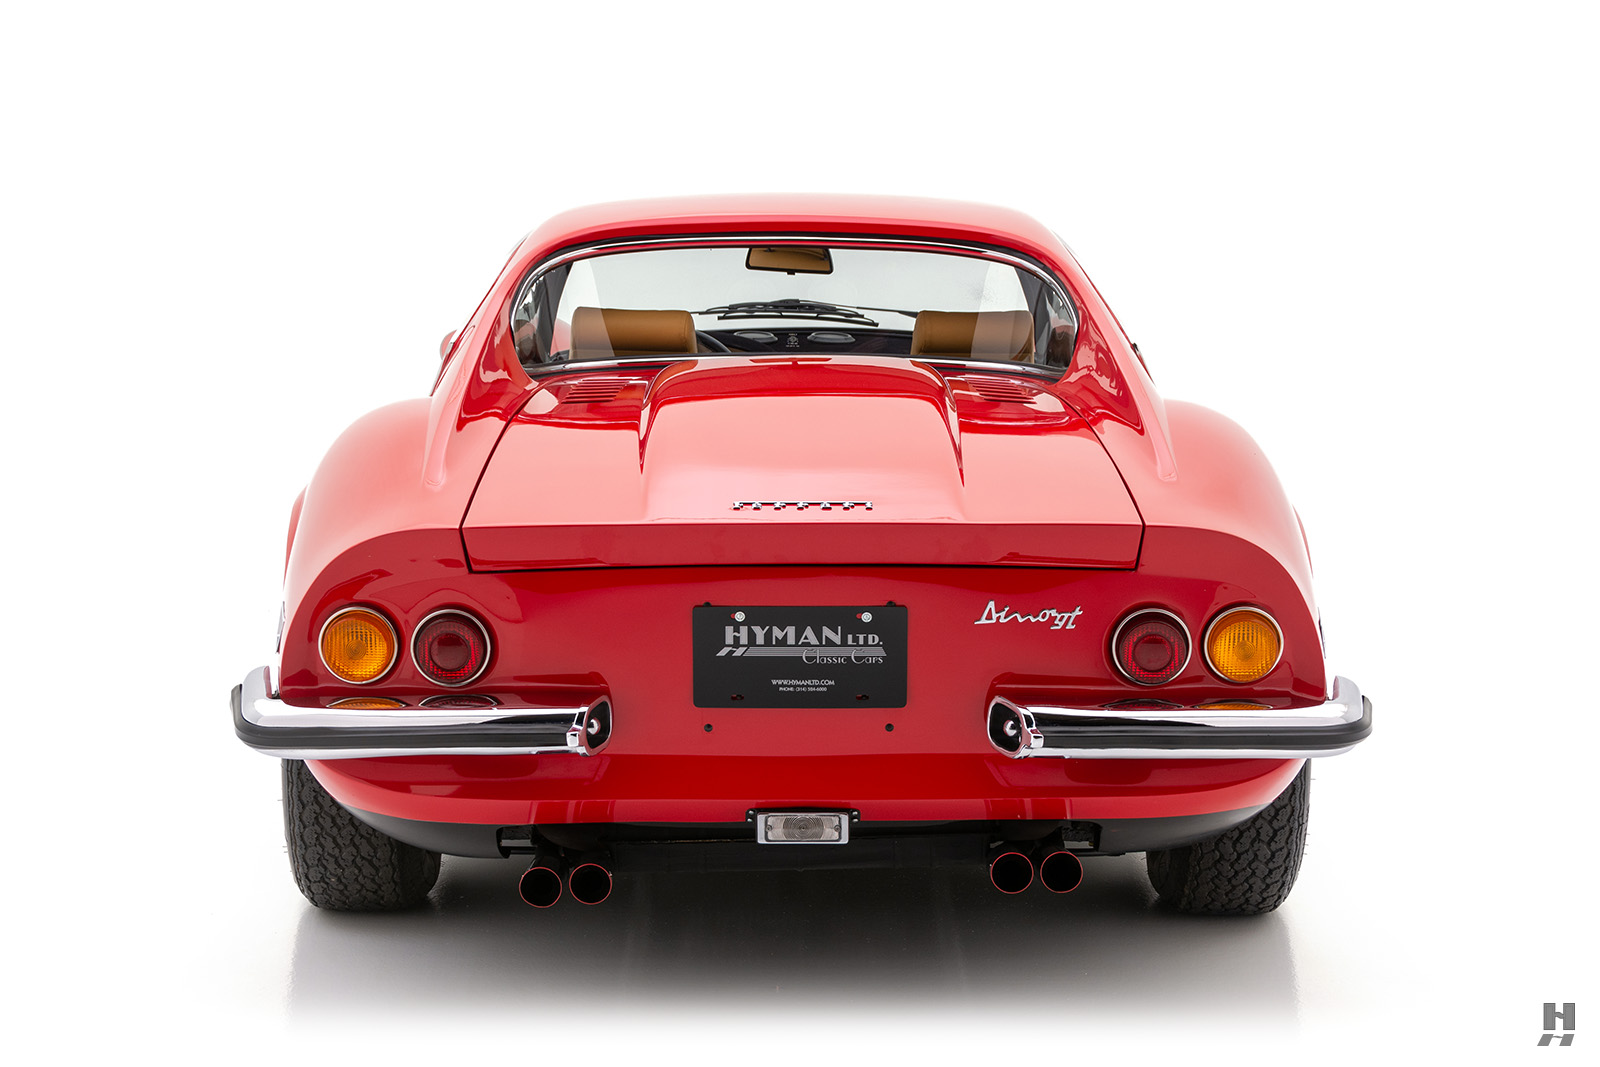 1972 Ferrari Dino 246 GTS